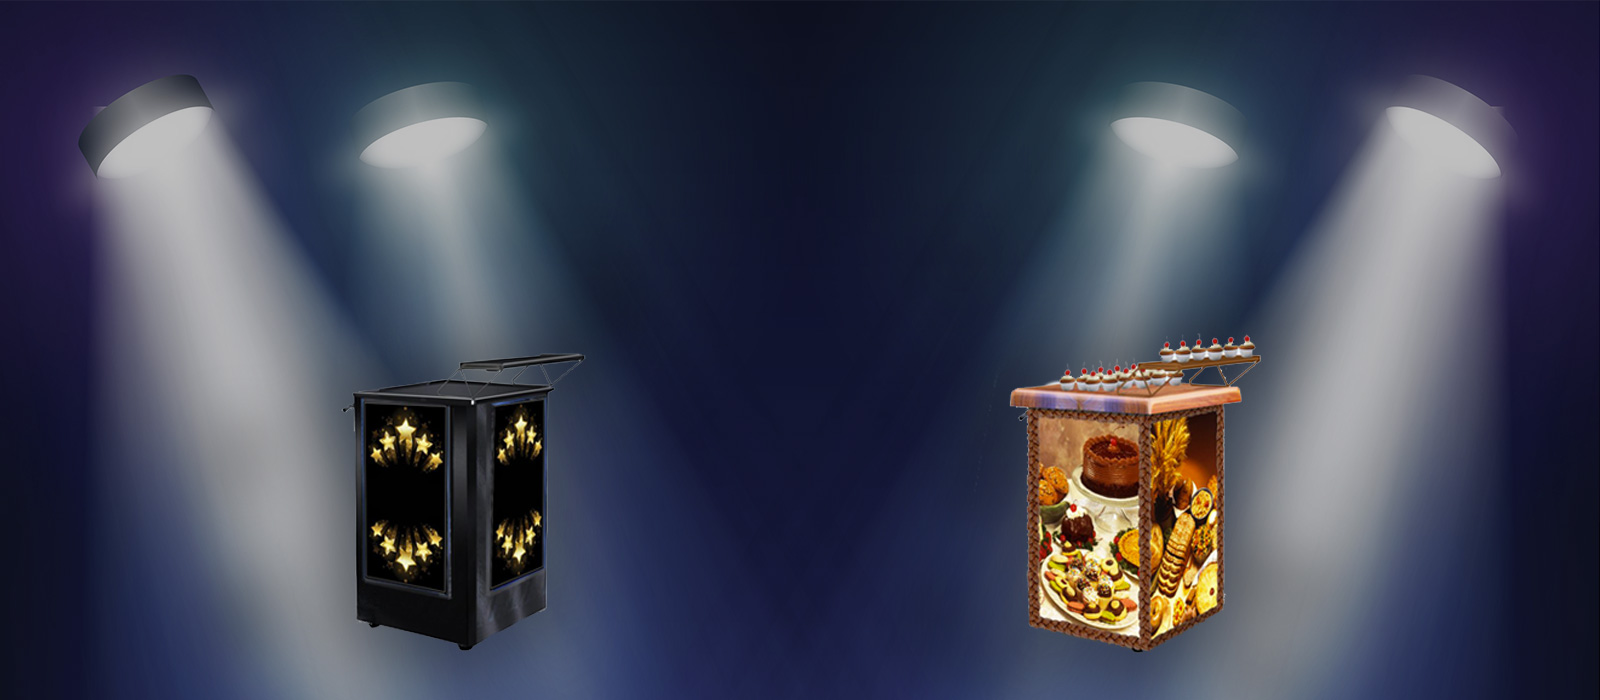 Slider background image with 2 bakery carts under a spotlight